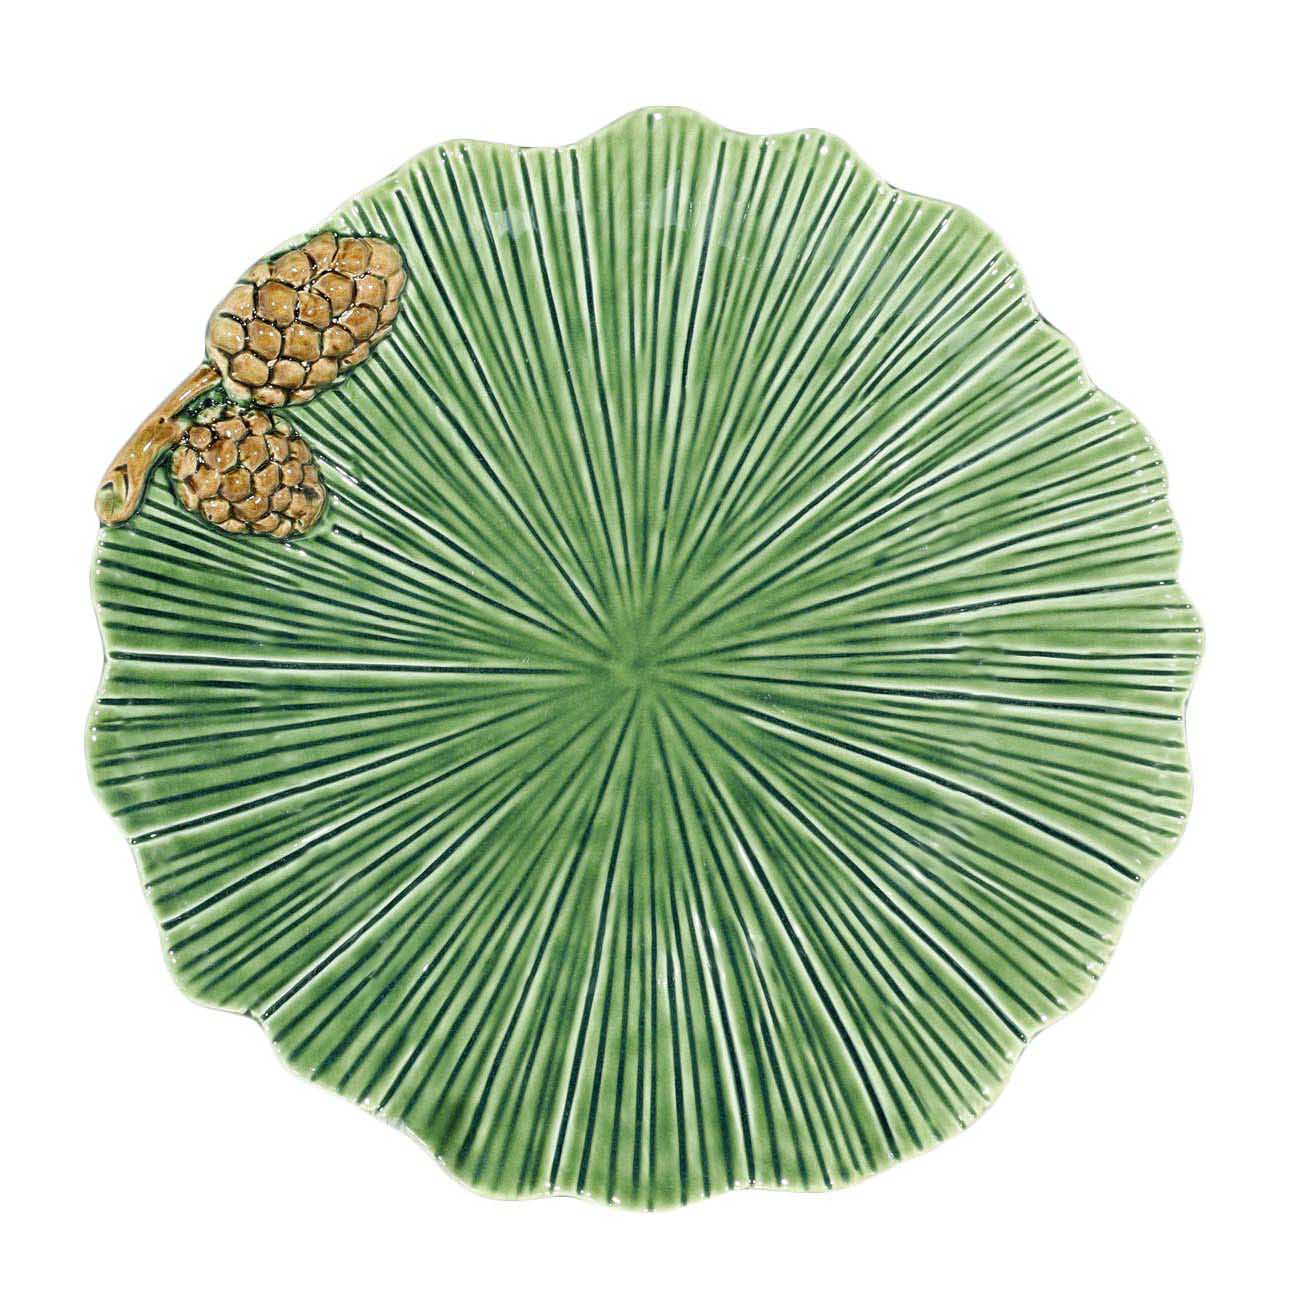 Блюдо, 21 см, керамика, круглое, зеленое, Шишки на листе, Fir cone